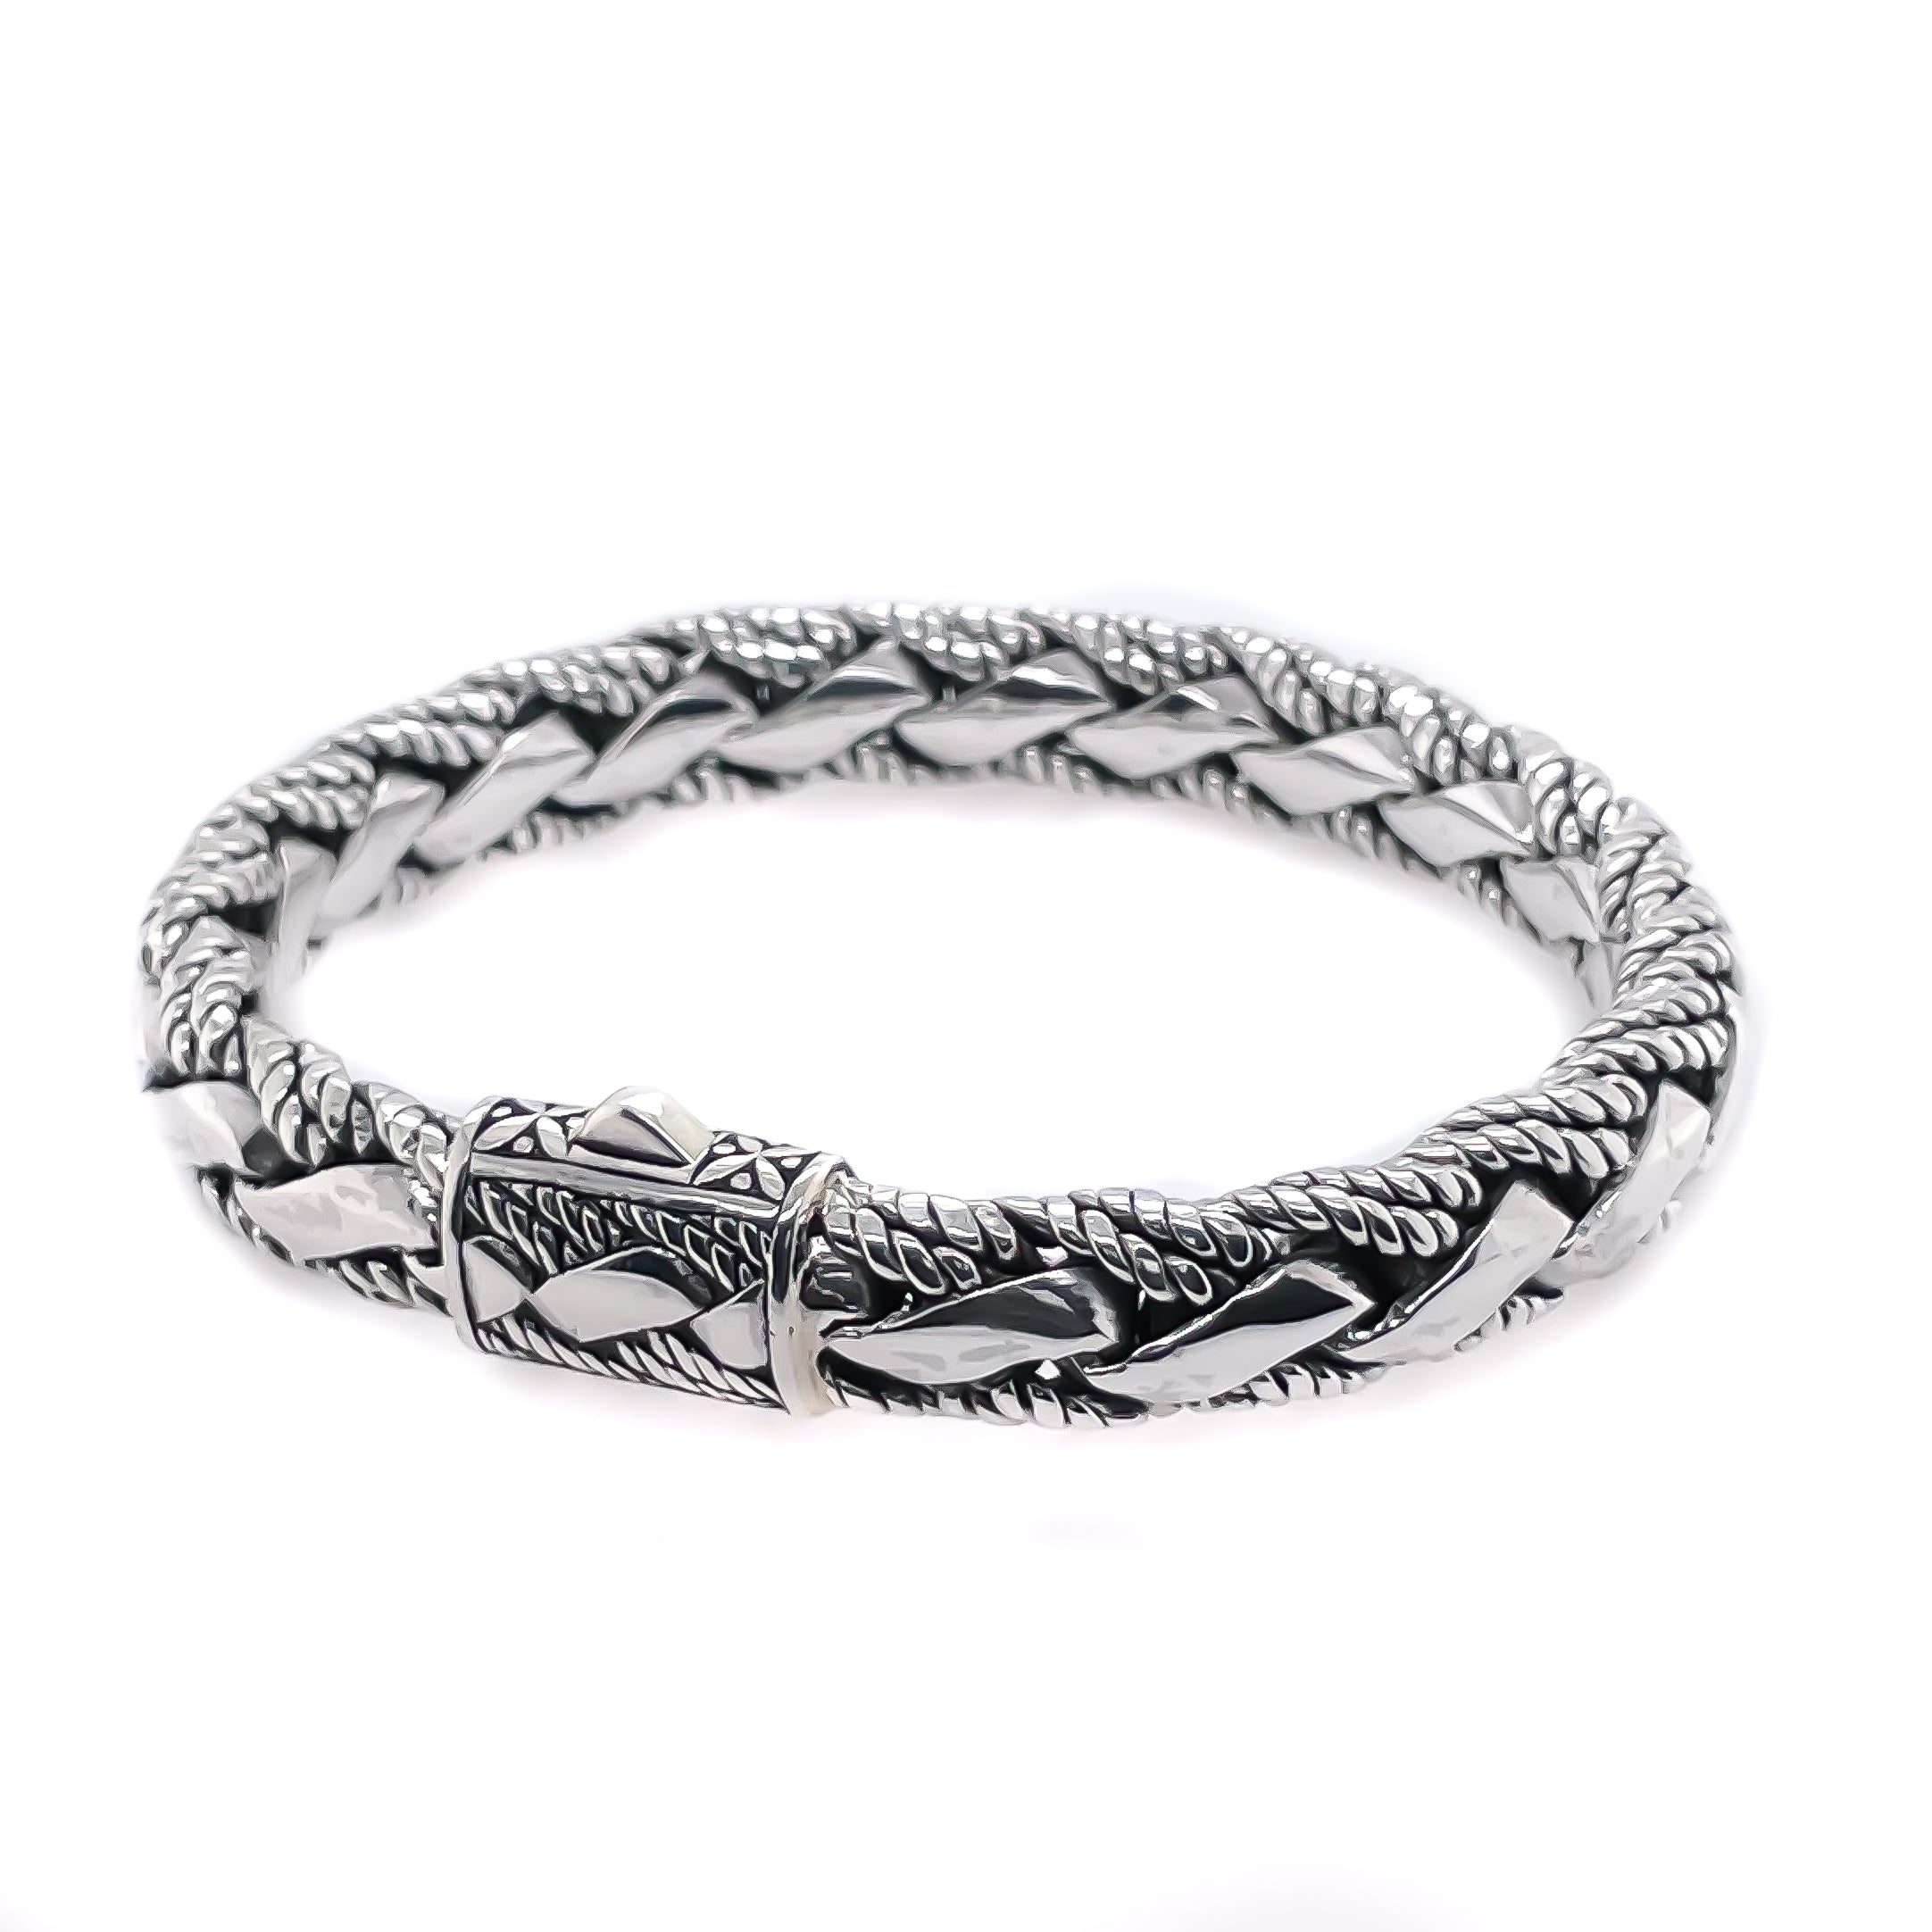 Genoa | Bracelets for men, Mens bracelet silver, Mens accessories bracelet